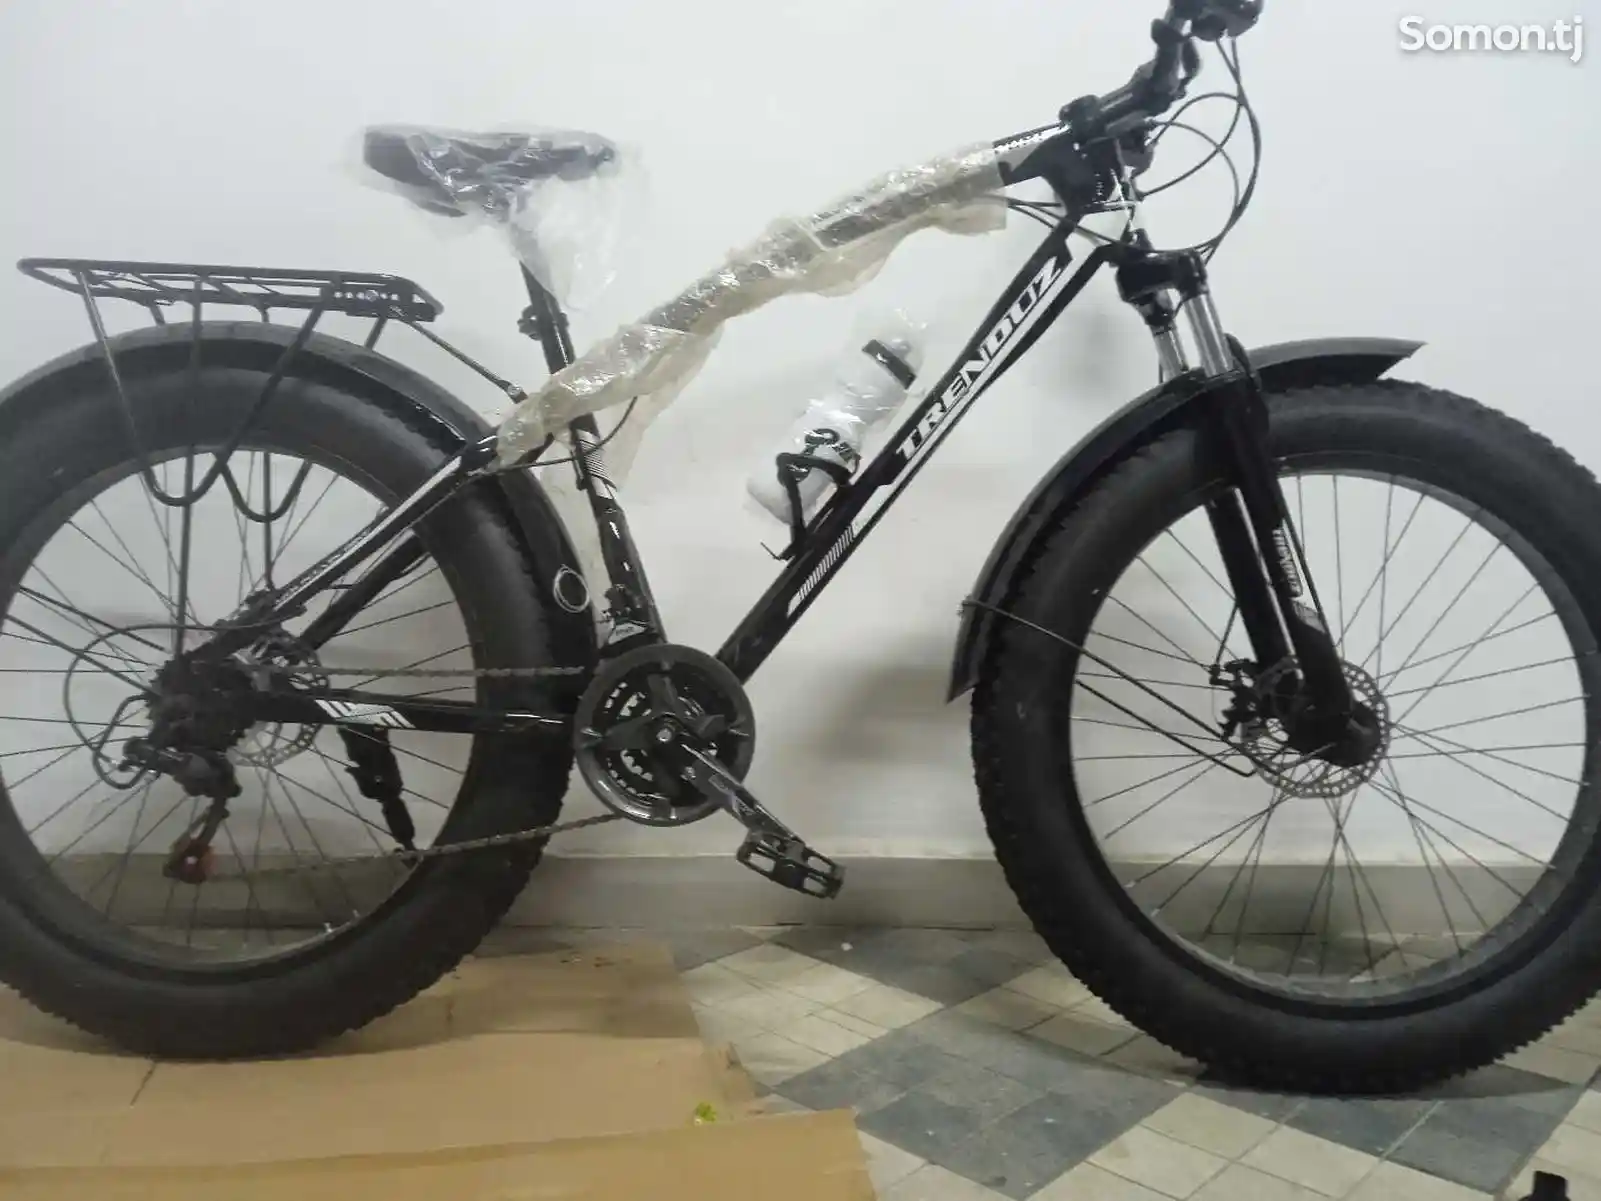 Bелосипед-1